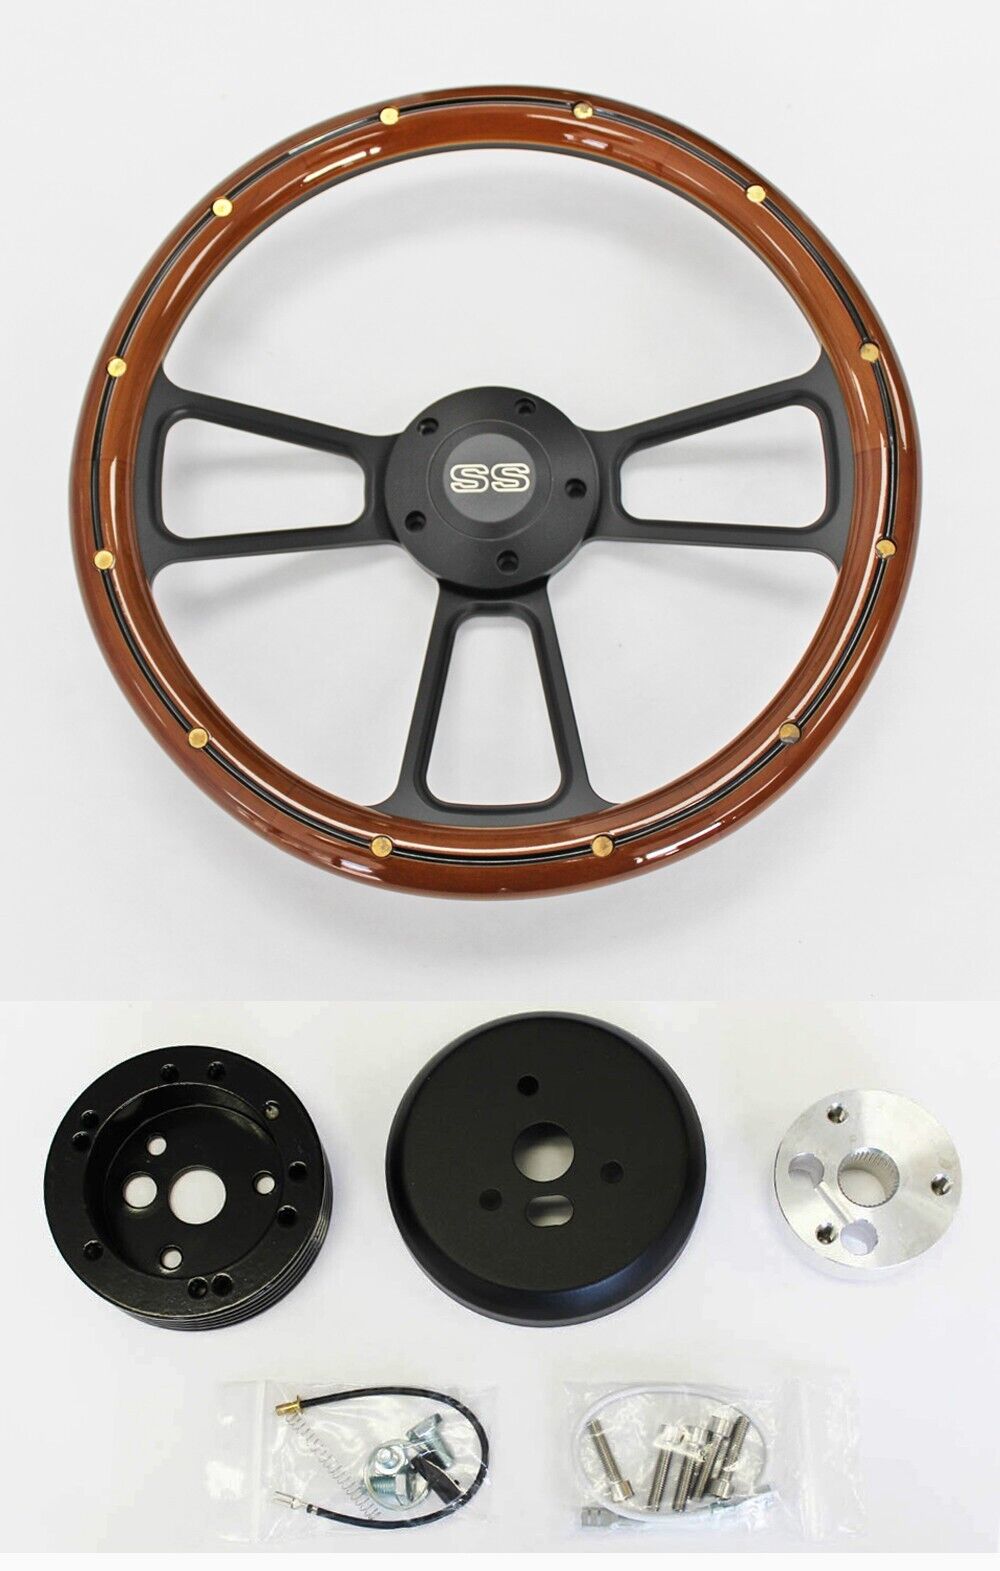 Nova Chevelle El Camino Steering Wheel Mahogany Wood & Black Spokes 14